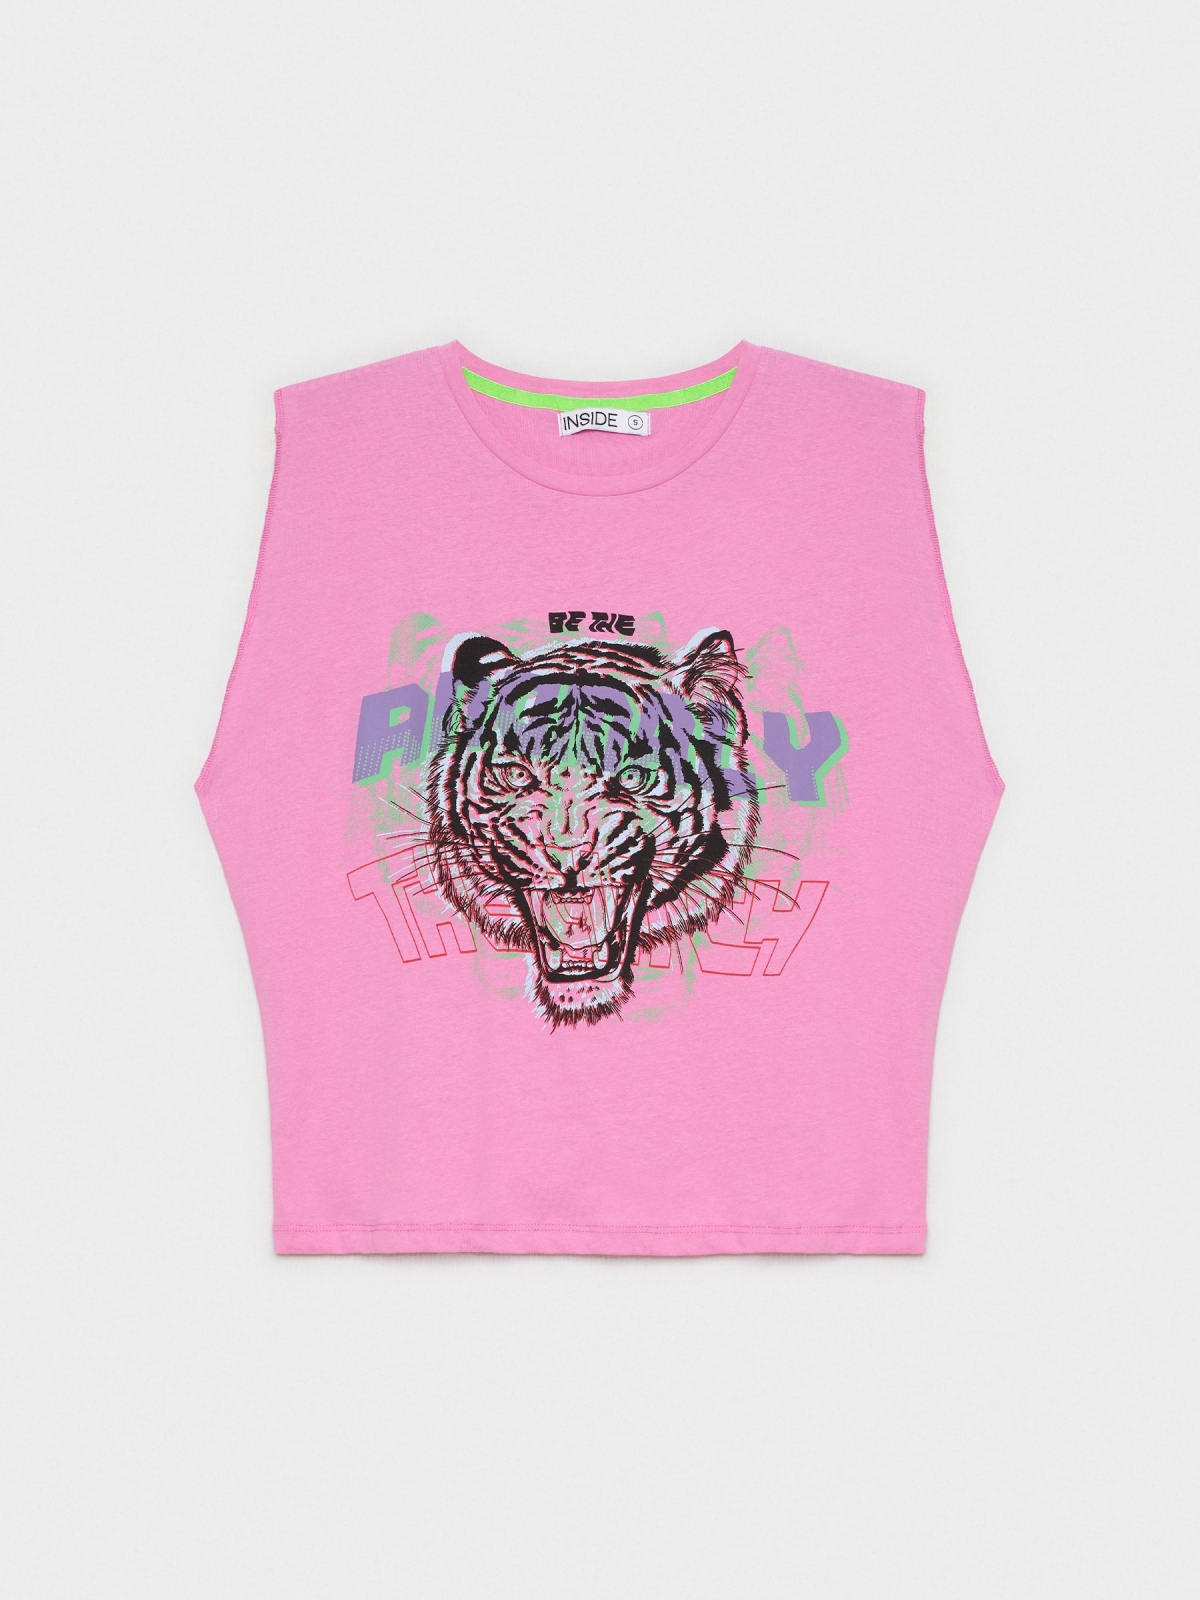  T-shirt de tigre sem mangas magenta